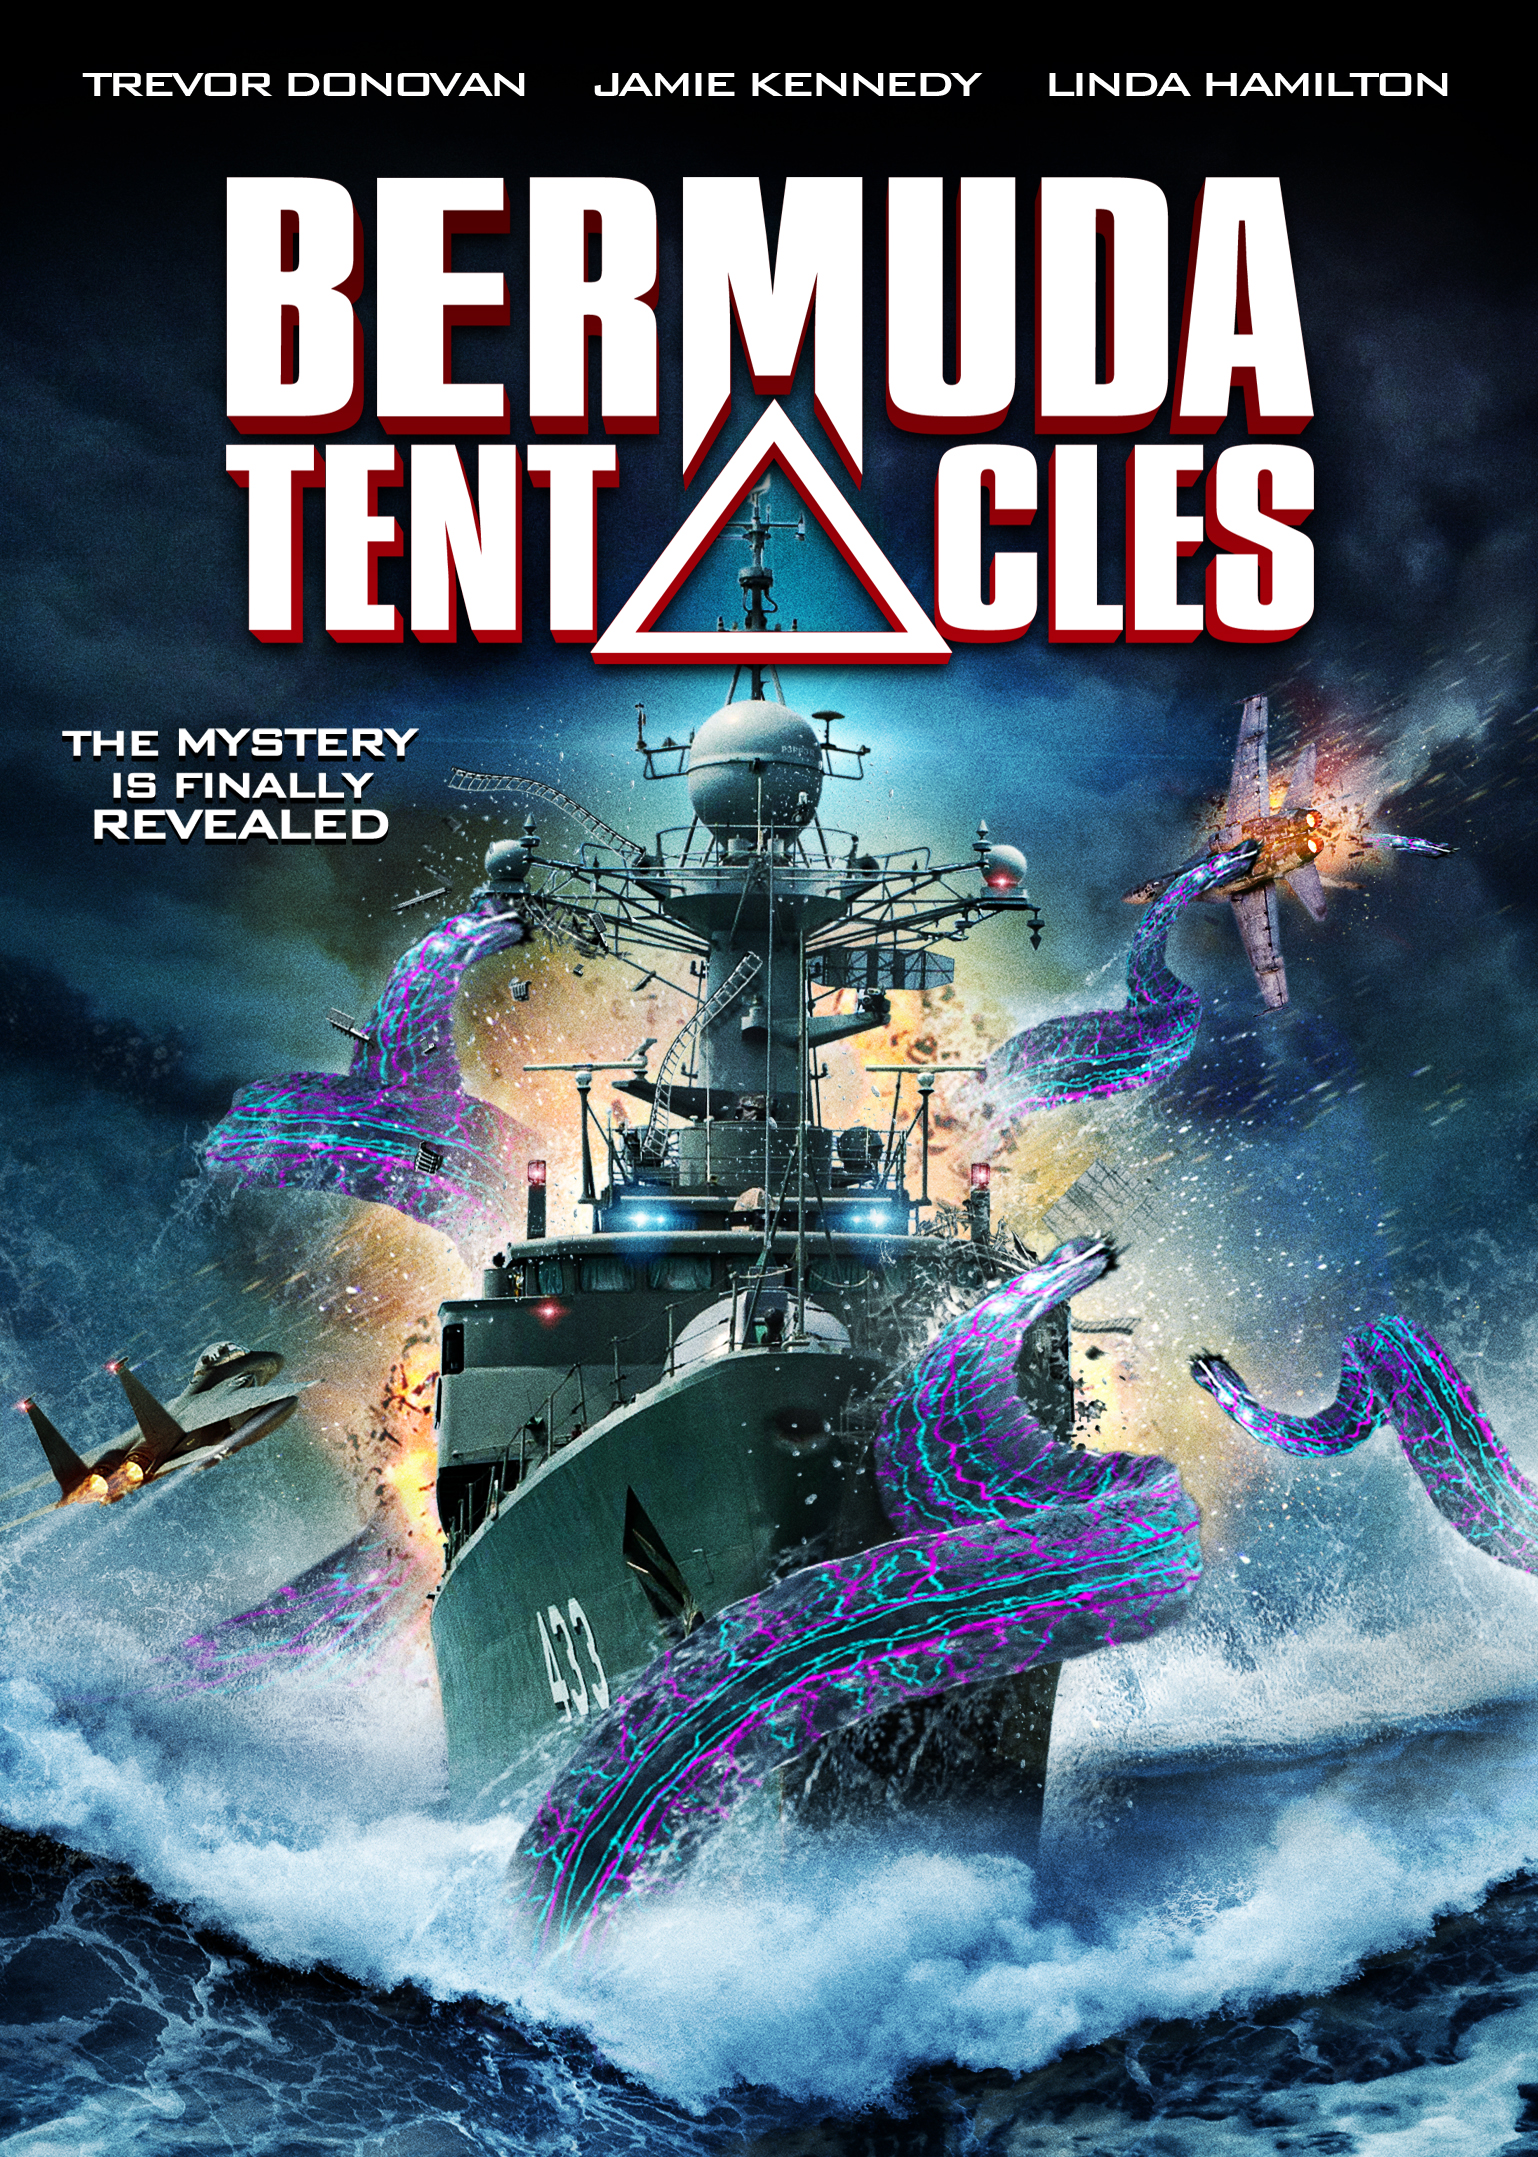 Bermuda Tentacles (2014) starring Trevor Donovan on DVD on DVD